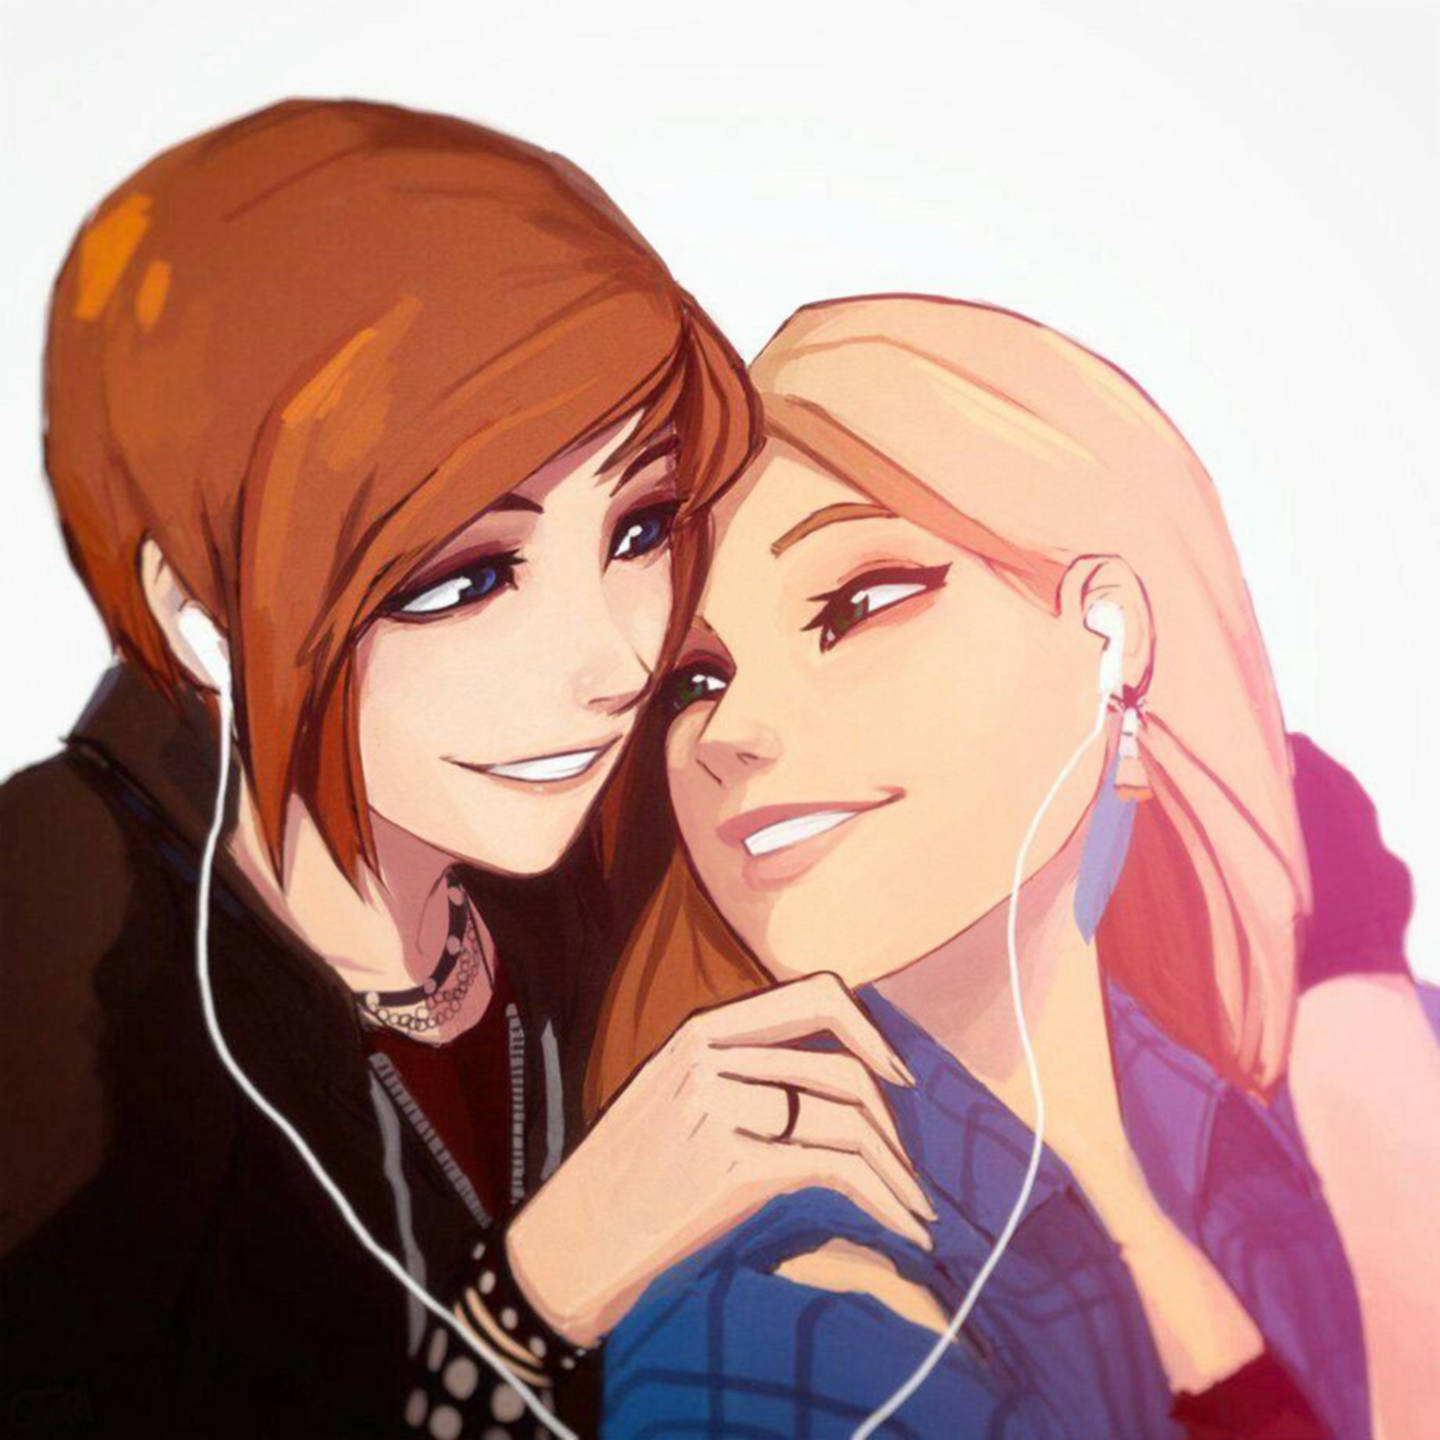 Anime Lesbians Chloe And Rachel Background